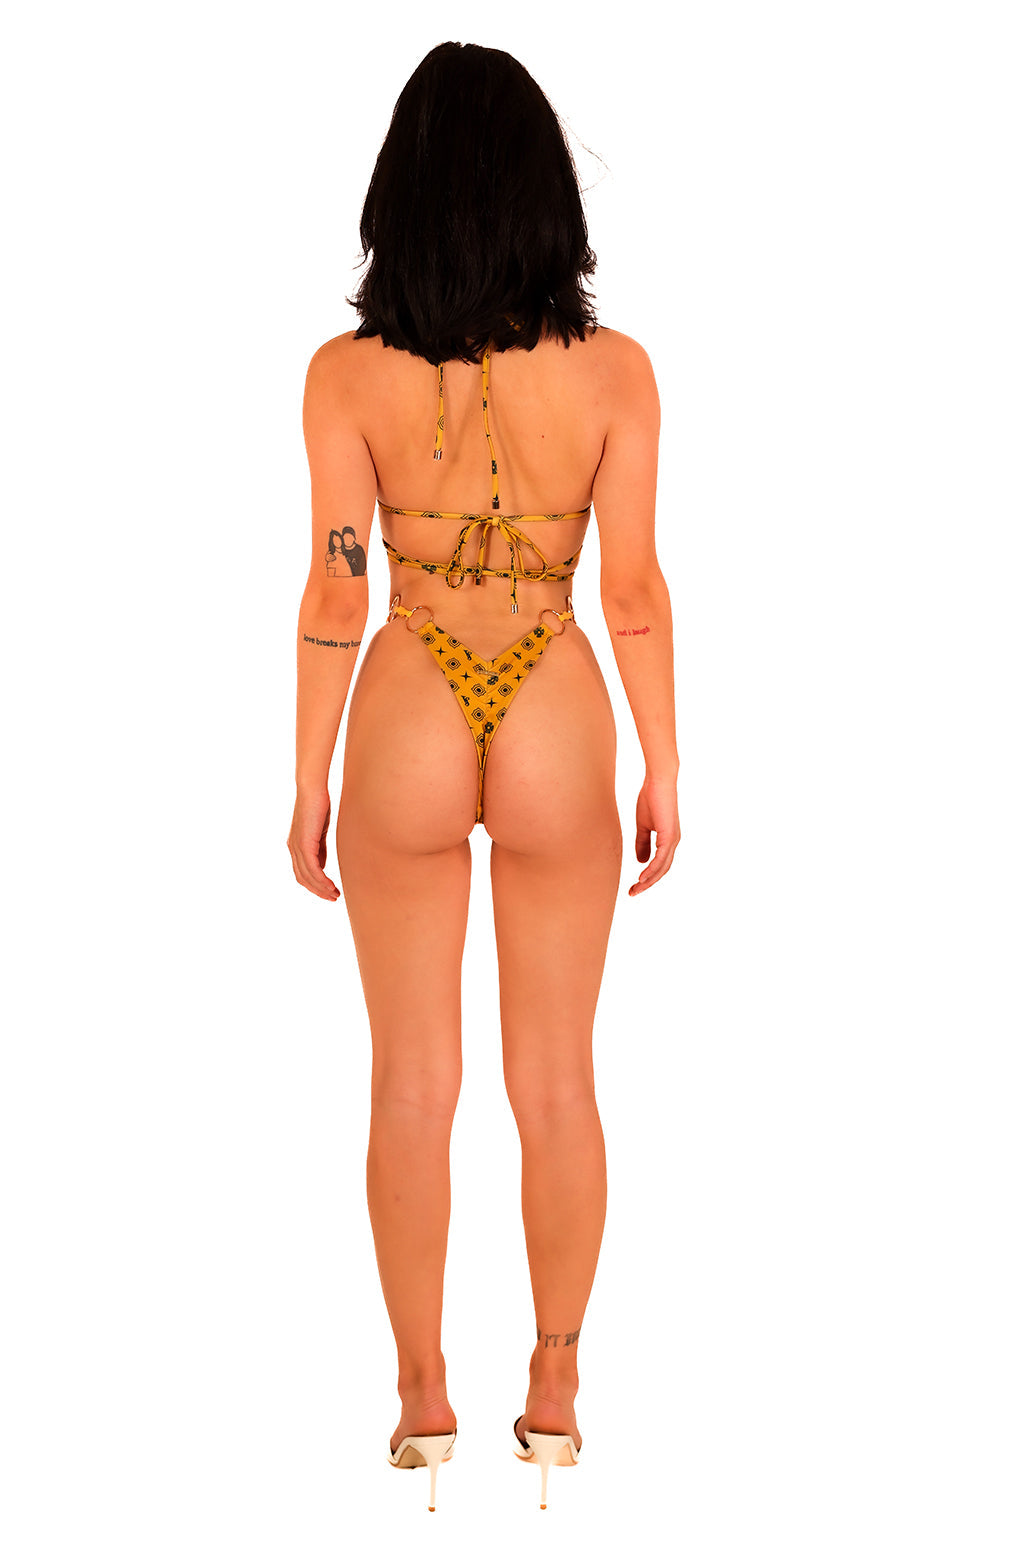 Gold Bikini Luxe Statement Black Vasaro Monogram High Cut Deep V Thong Bottom Style O Rings